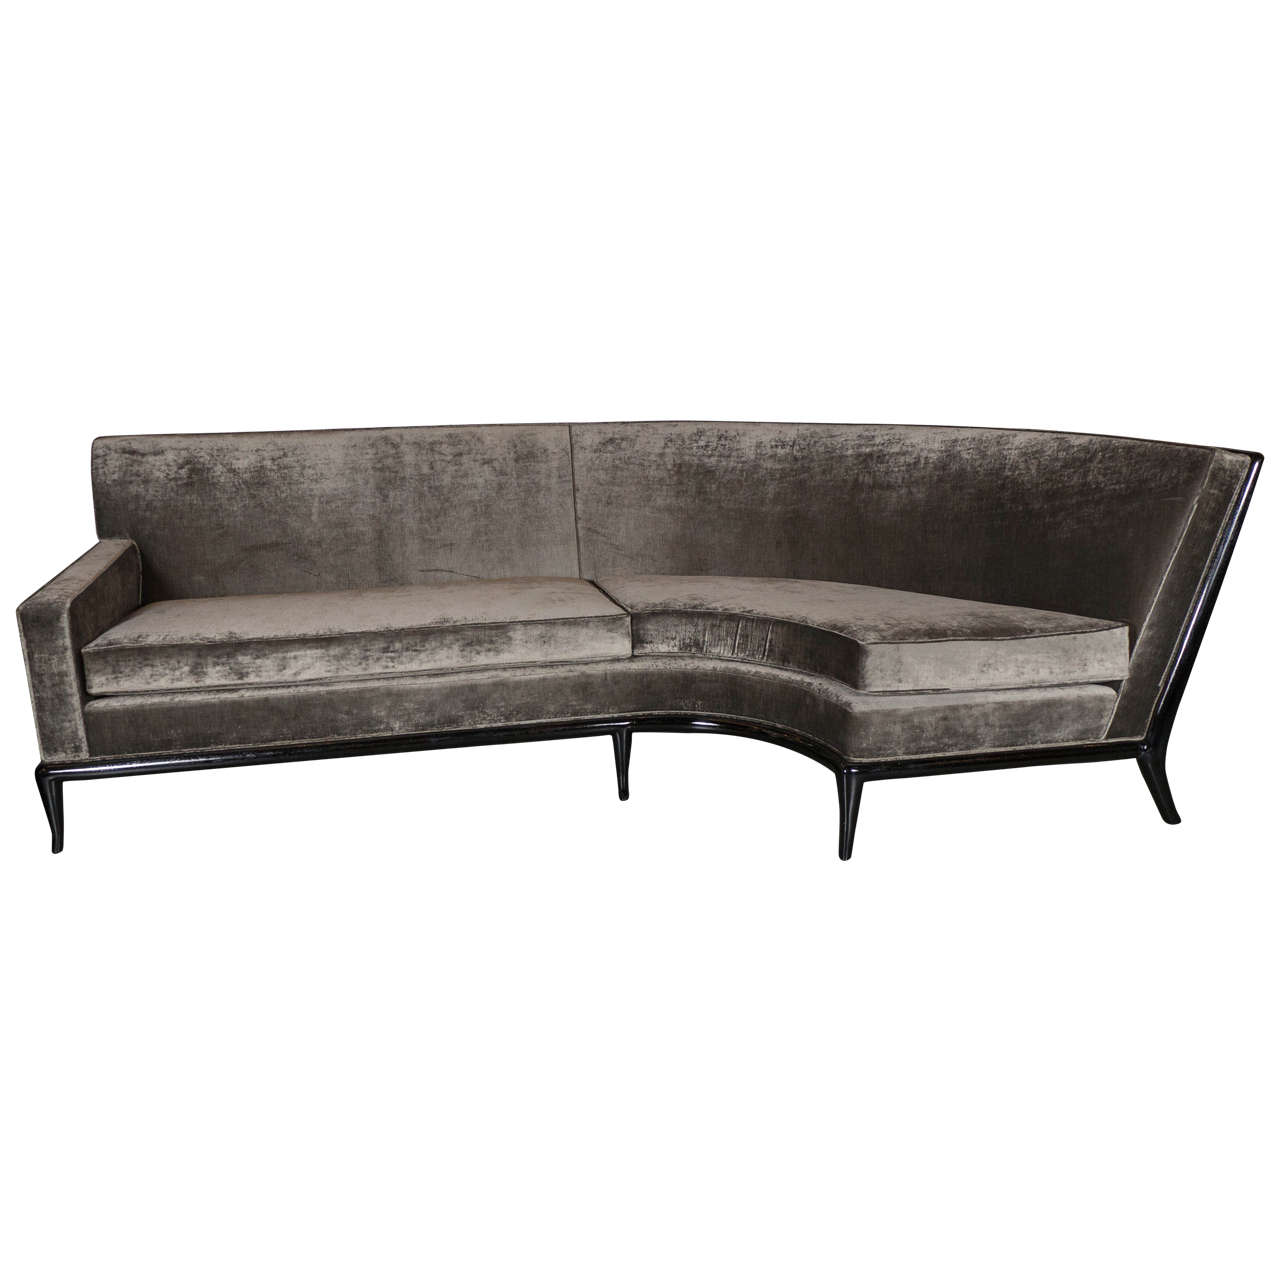 Luxe Mid-Century Modernist Sofa by Robsjohn-Gibbings for The Widdicomb Co